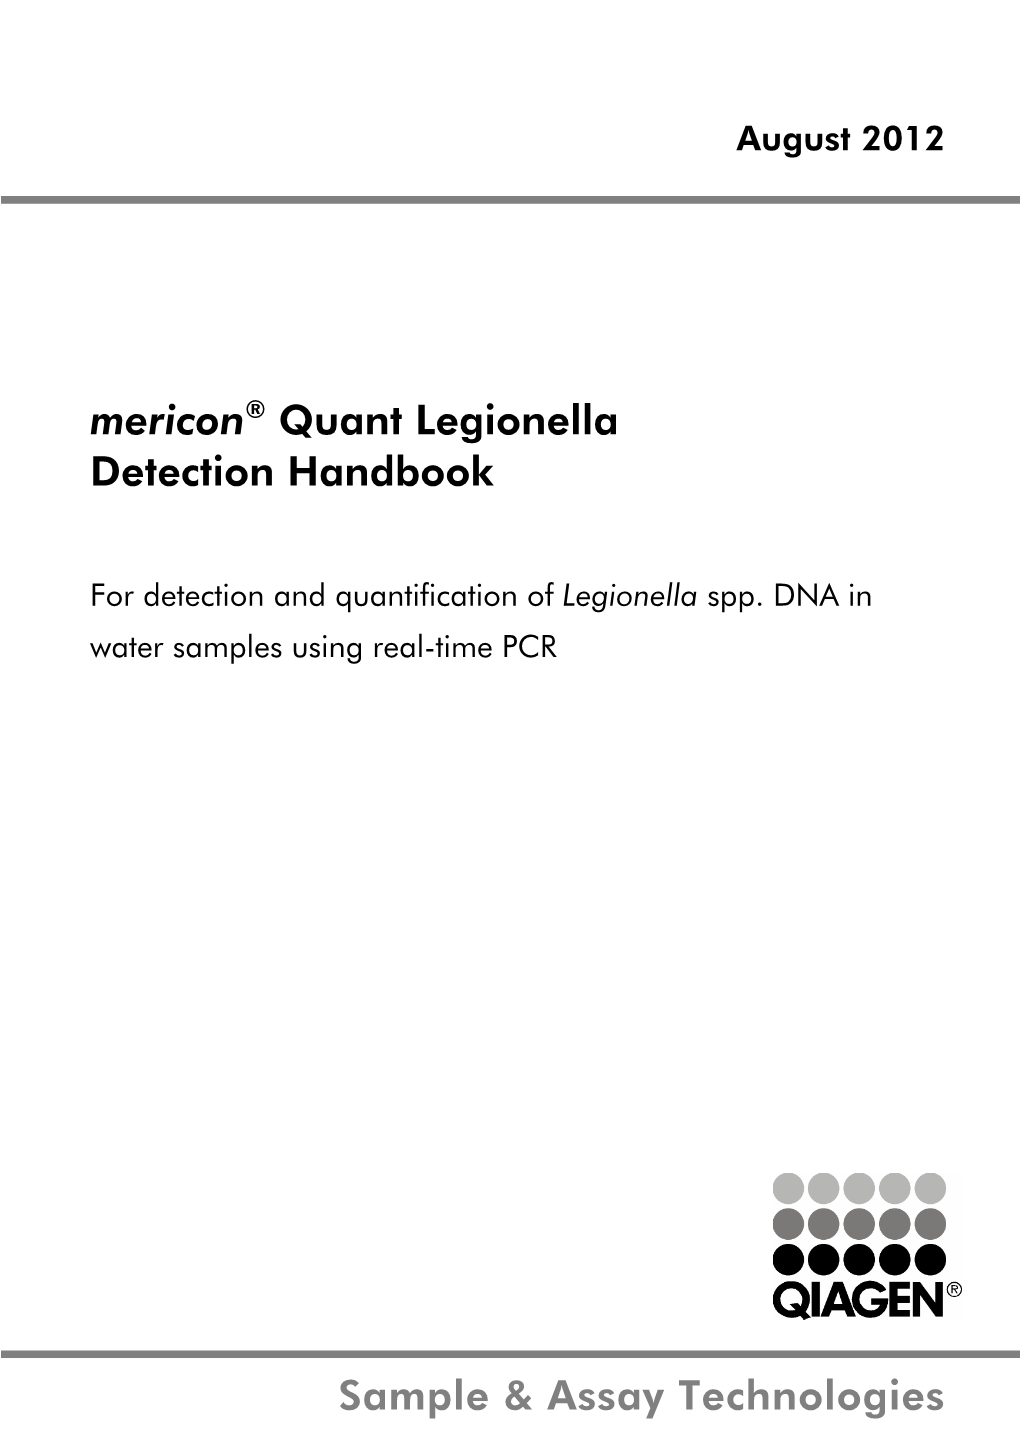 Mericon® Quant Legionella Detection Handbook